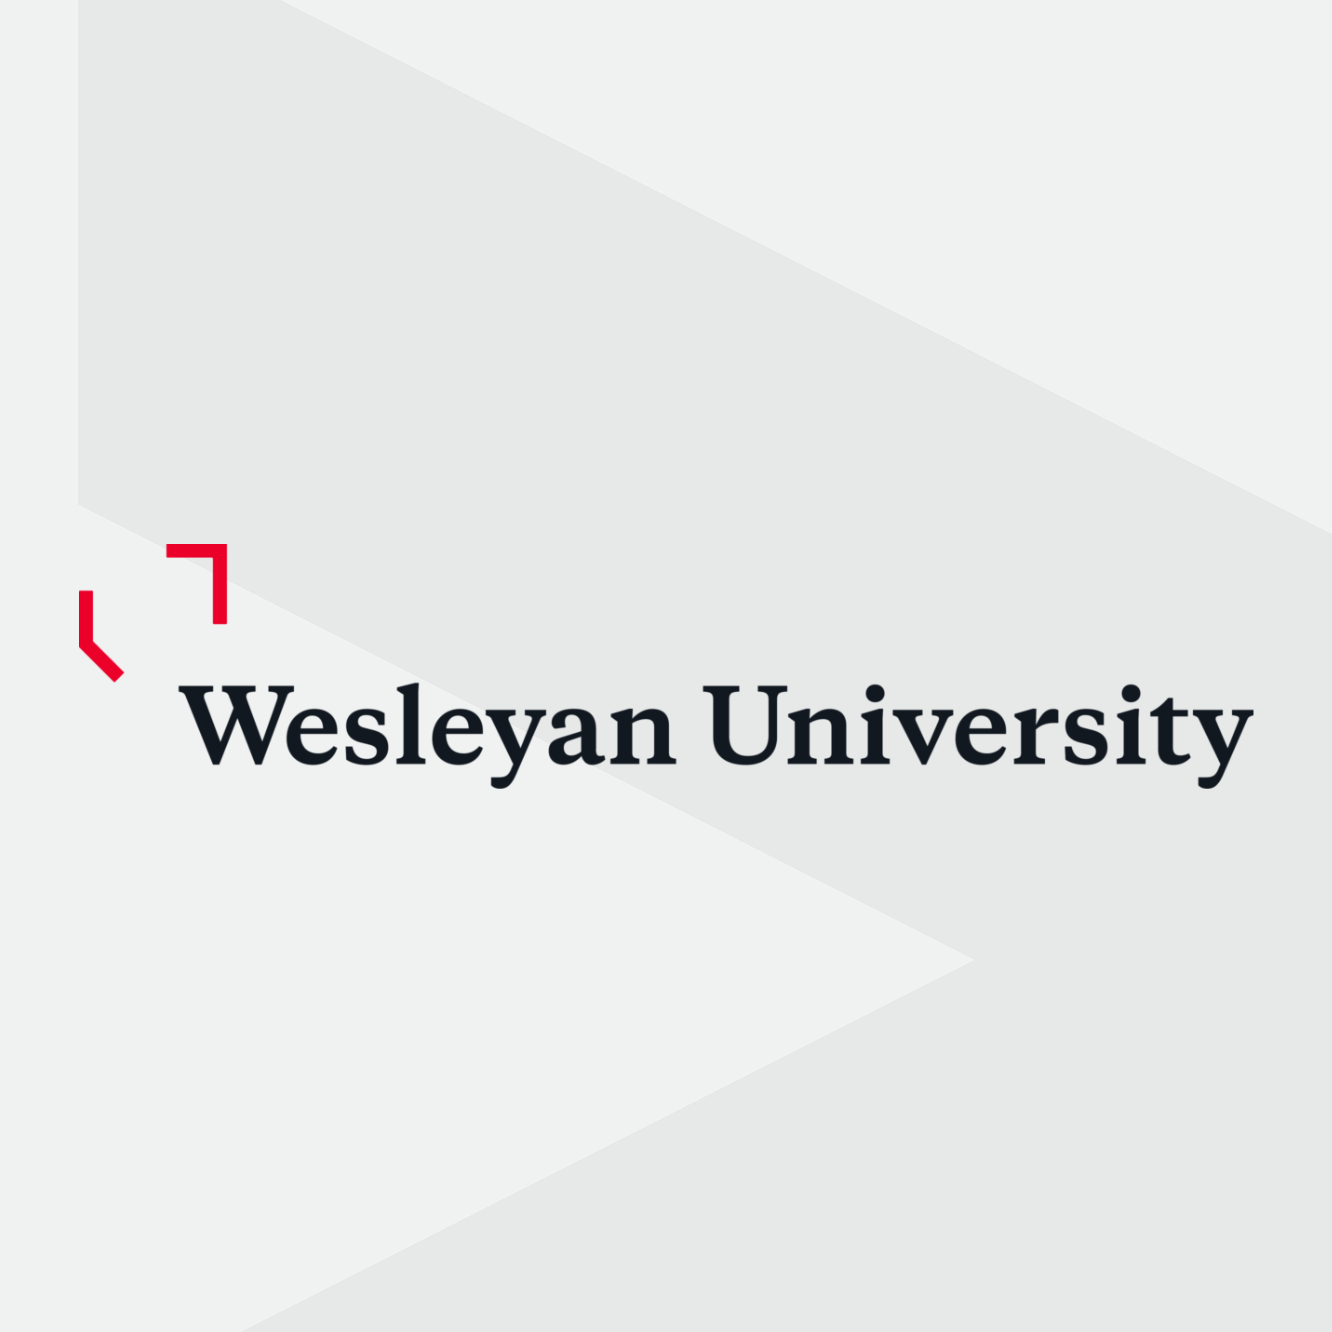 Wesleyan University case study